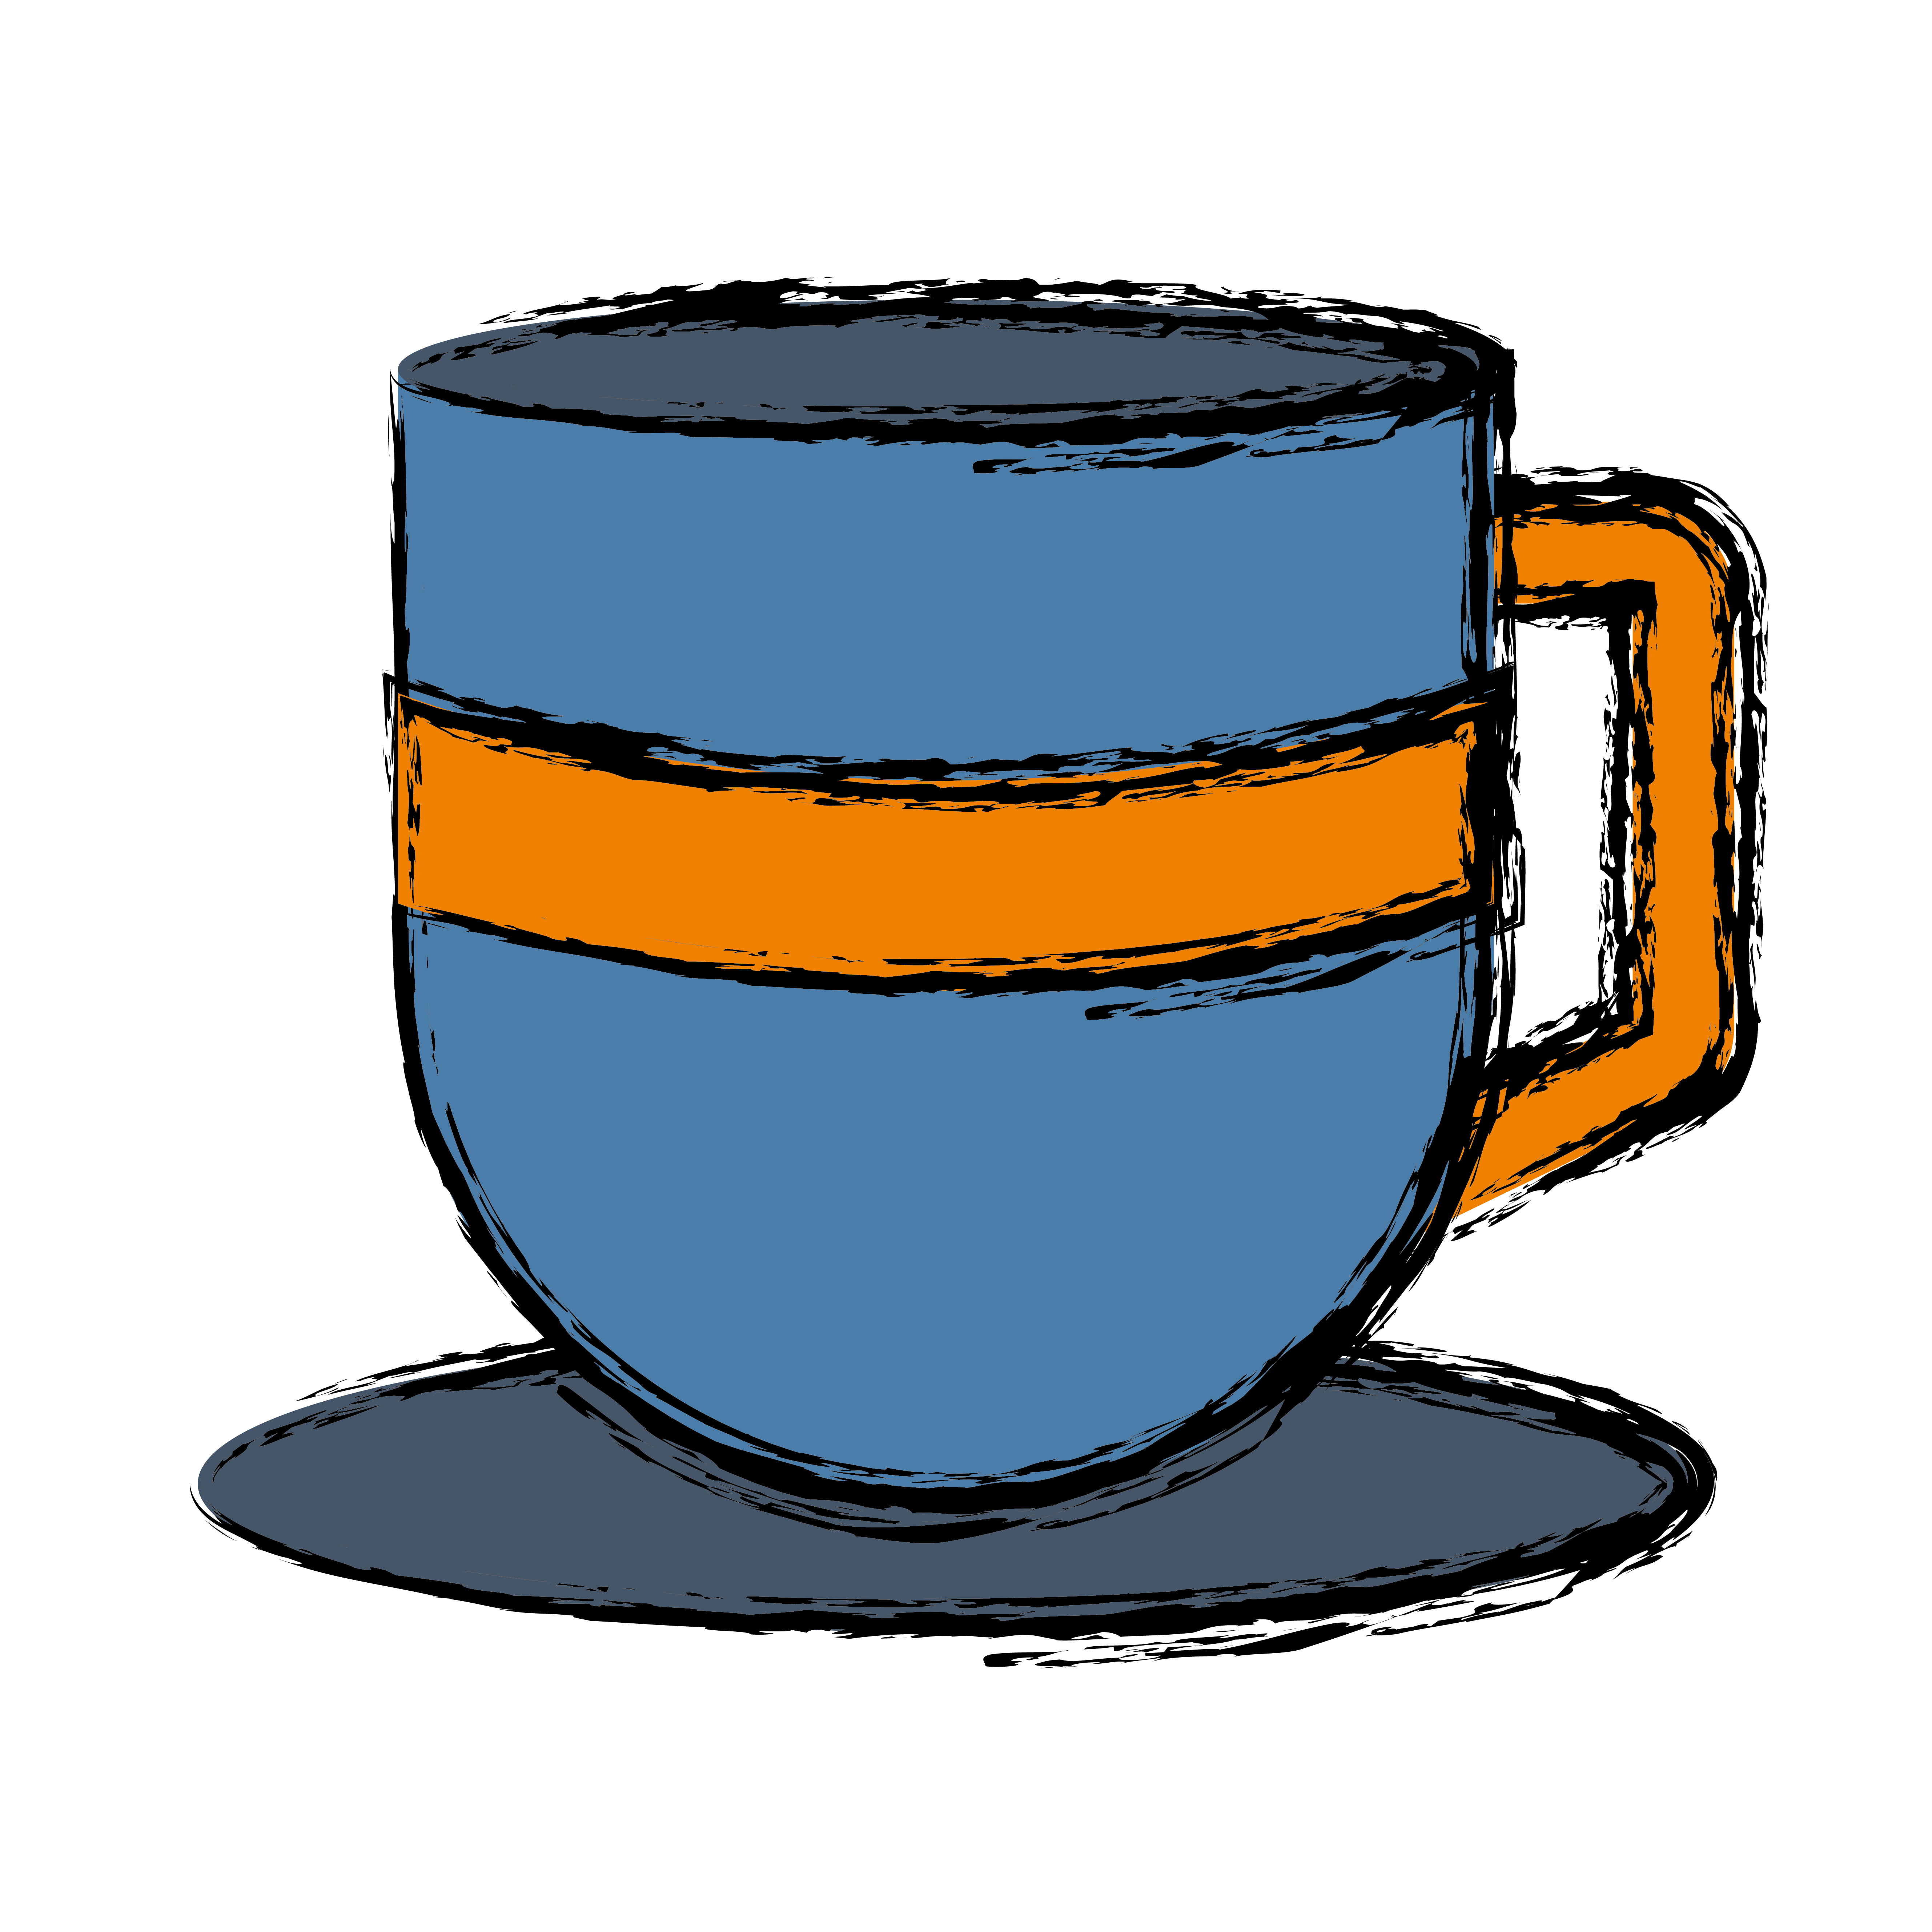 Download coffee mug icon - Download Free Vectors, Clipart Graphics ...